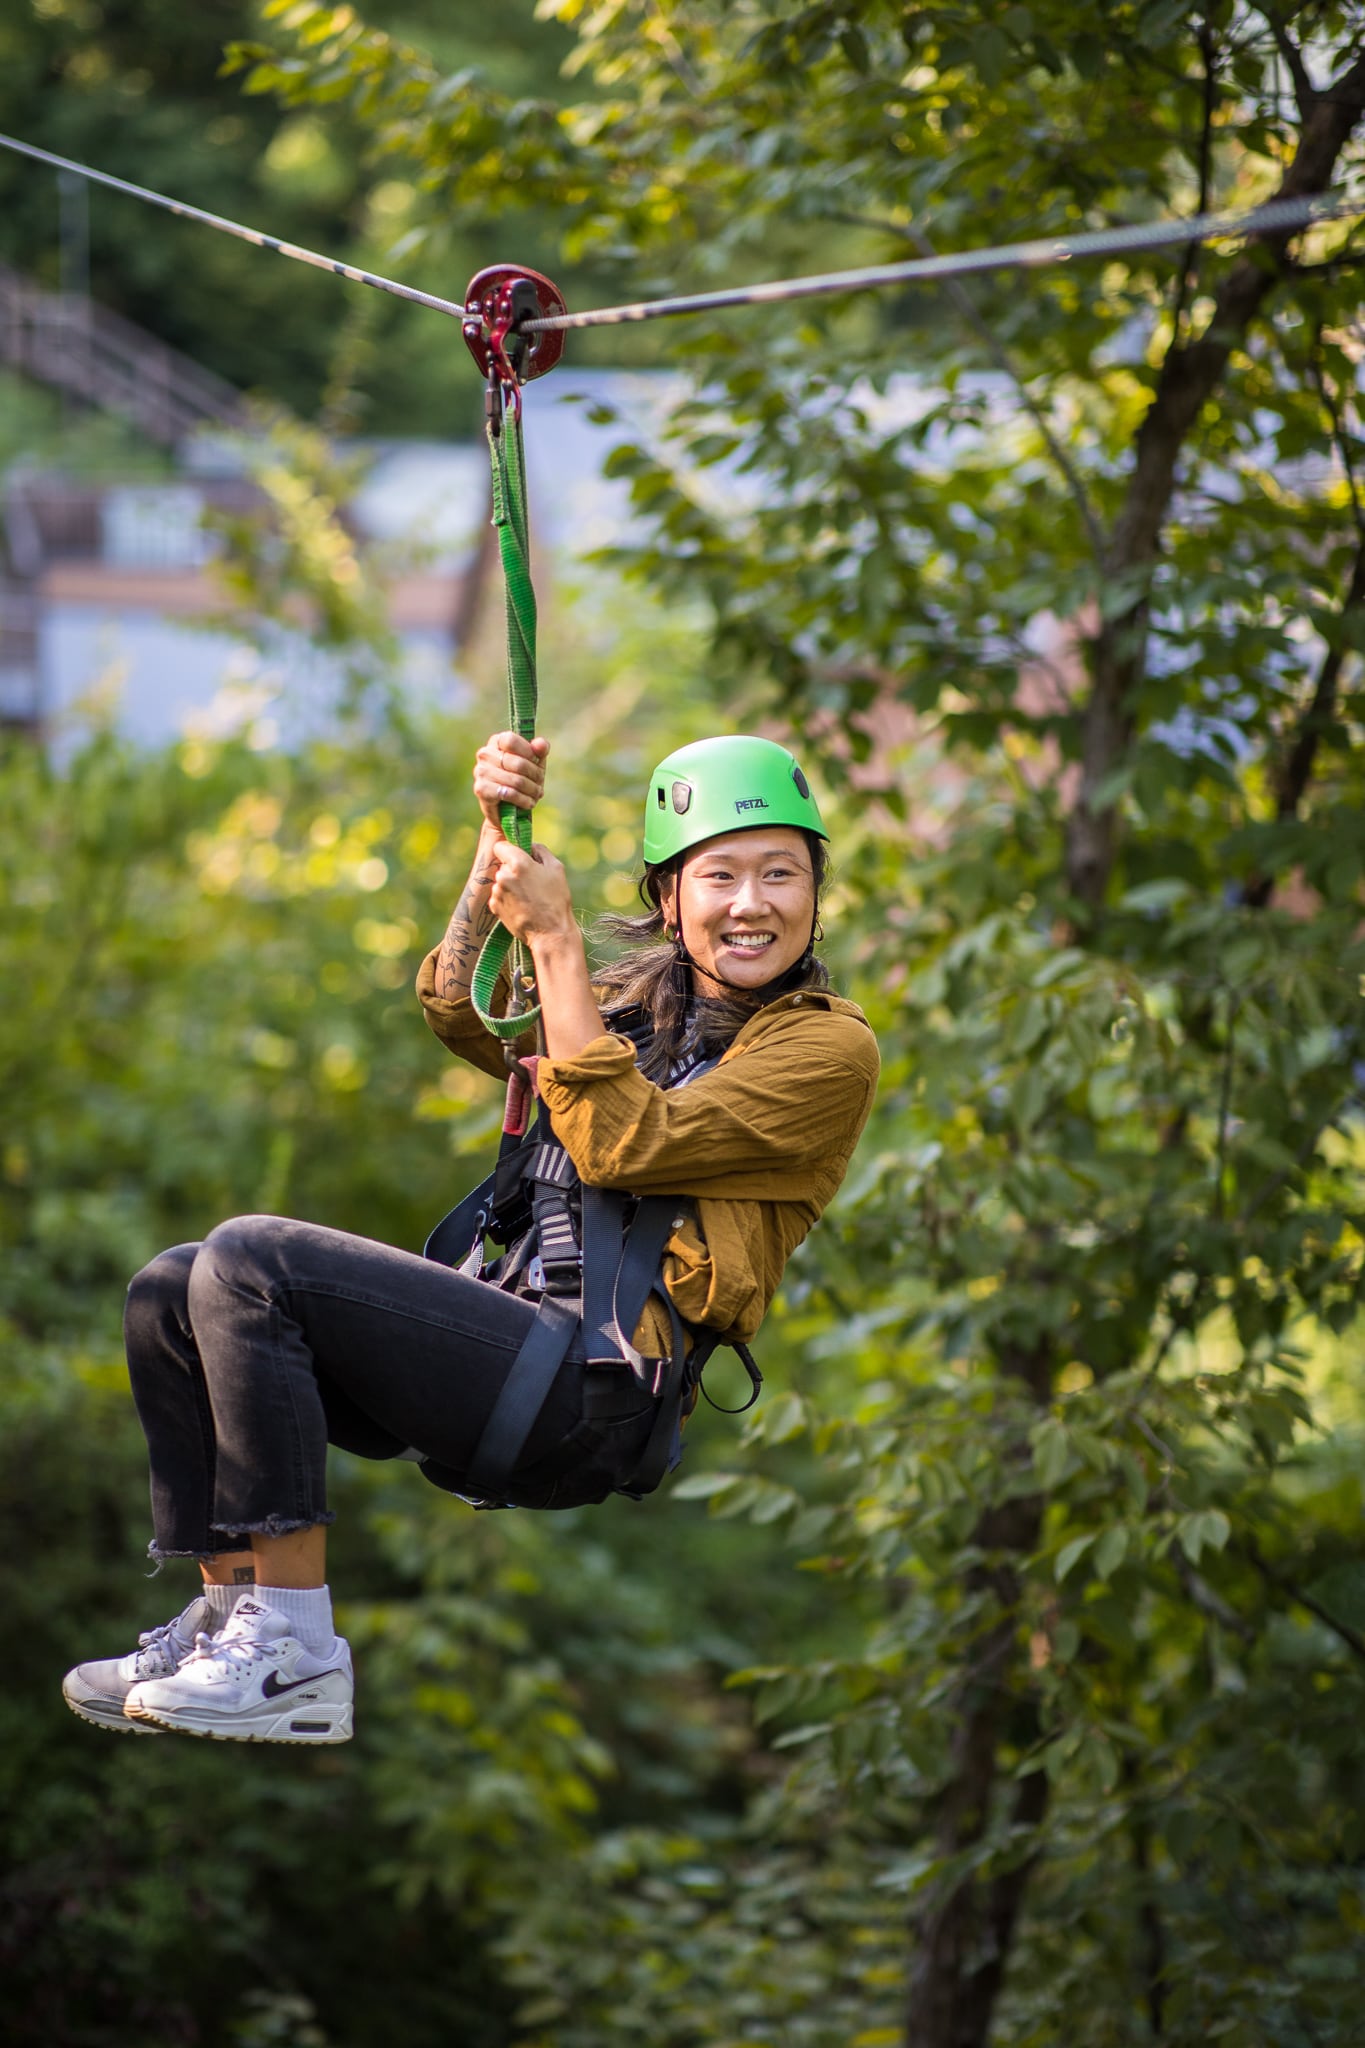 A woman rides a zipline through trees